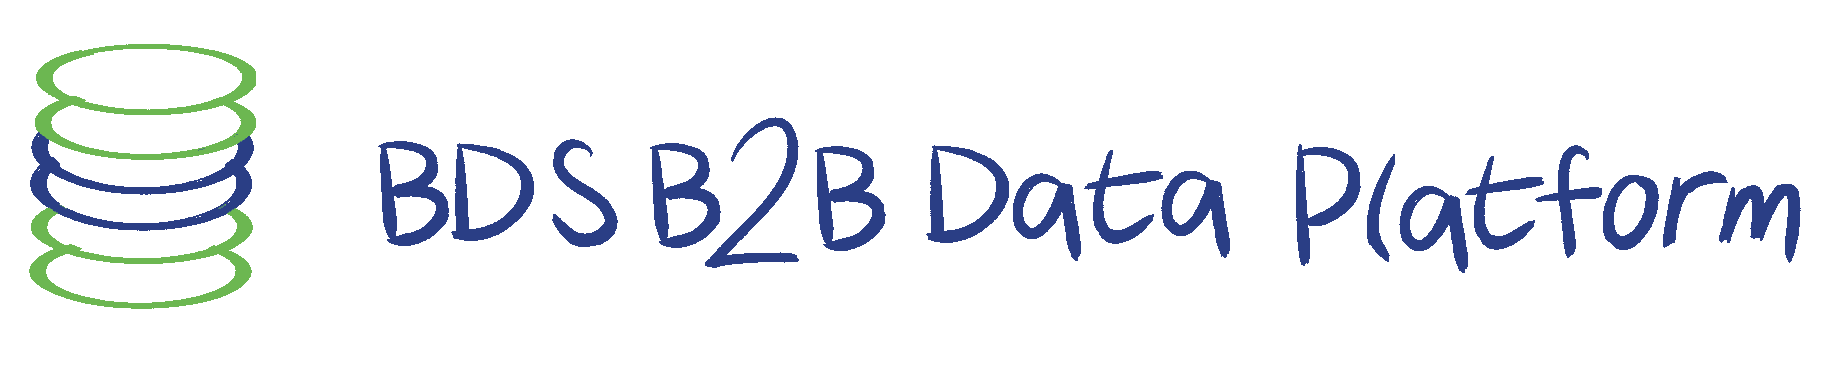 links grafisch dargestellt eine Datenbank, Text: BDS B2B Data Platform